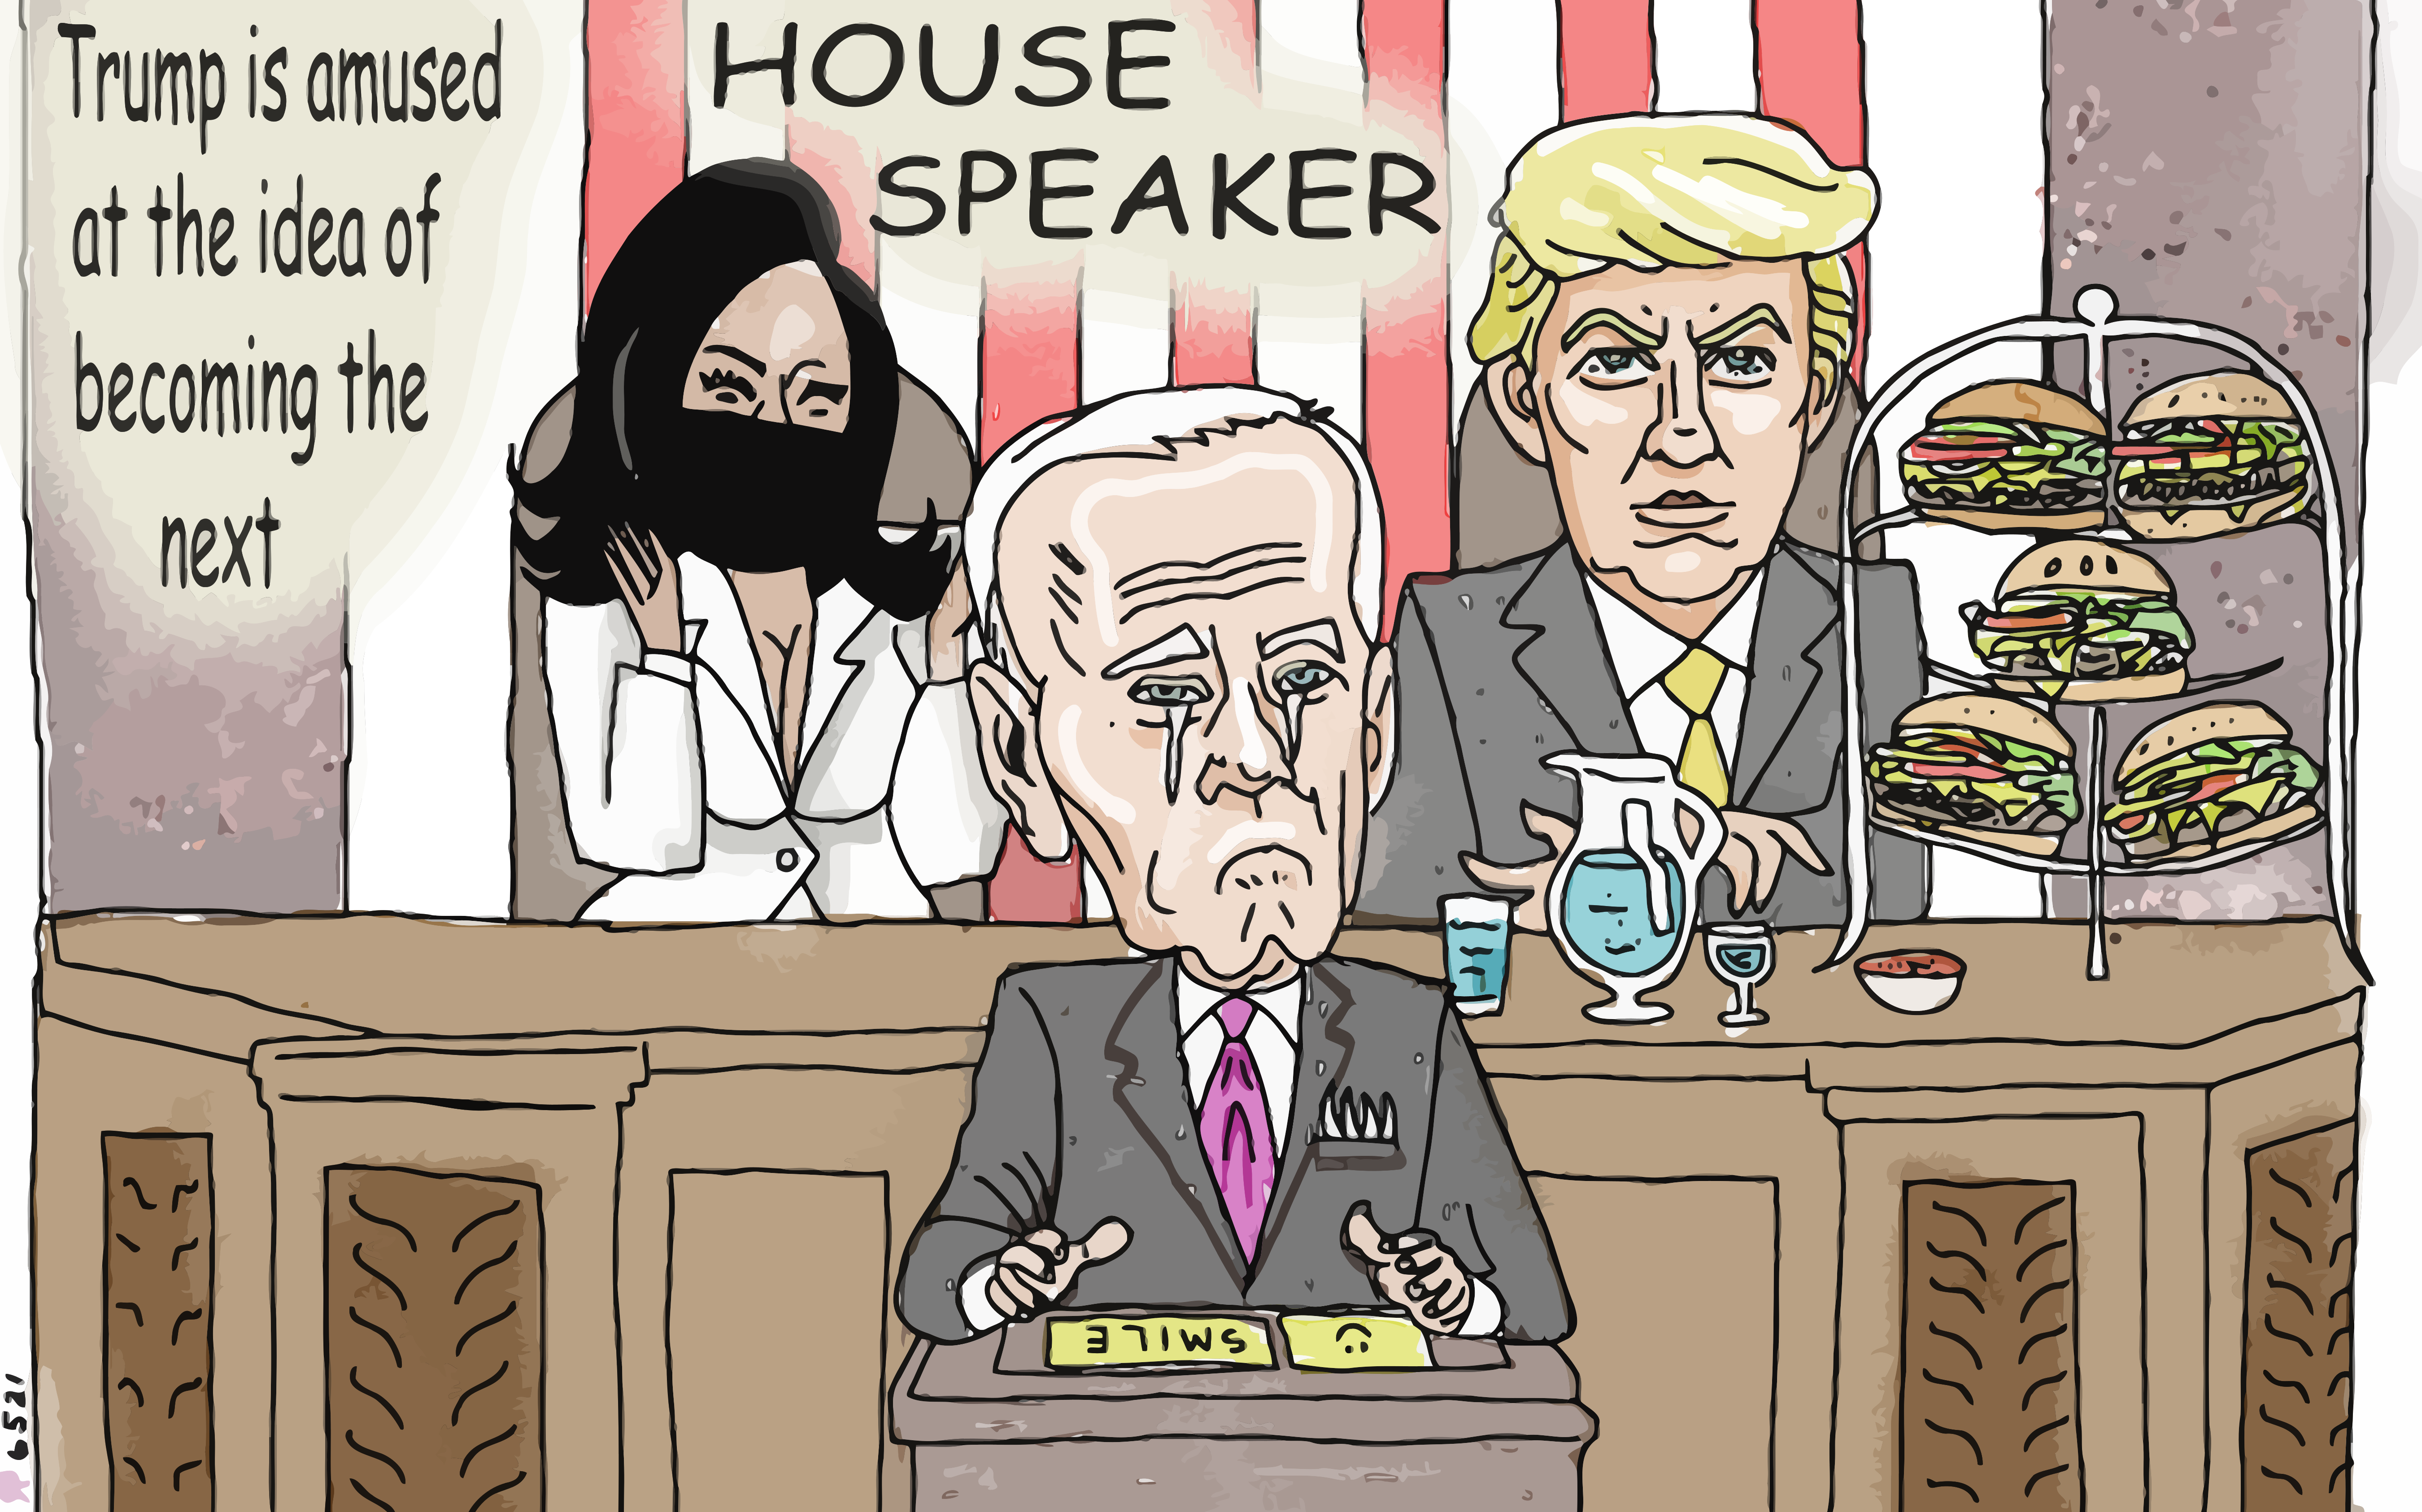 President Donald Trump Joe Biden Kamala Harris speaker of the house political editorial cartoon post thumbnail image